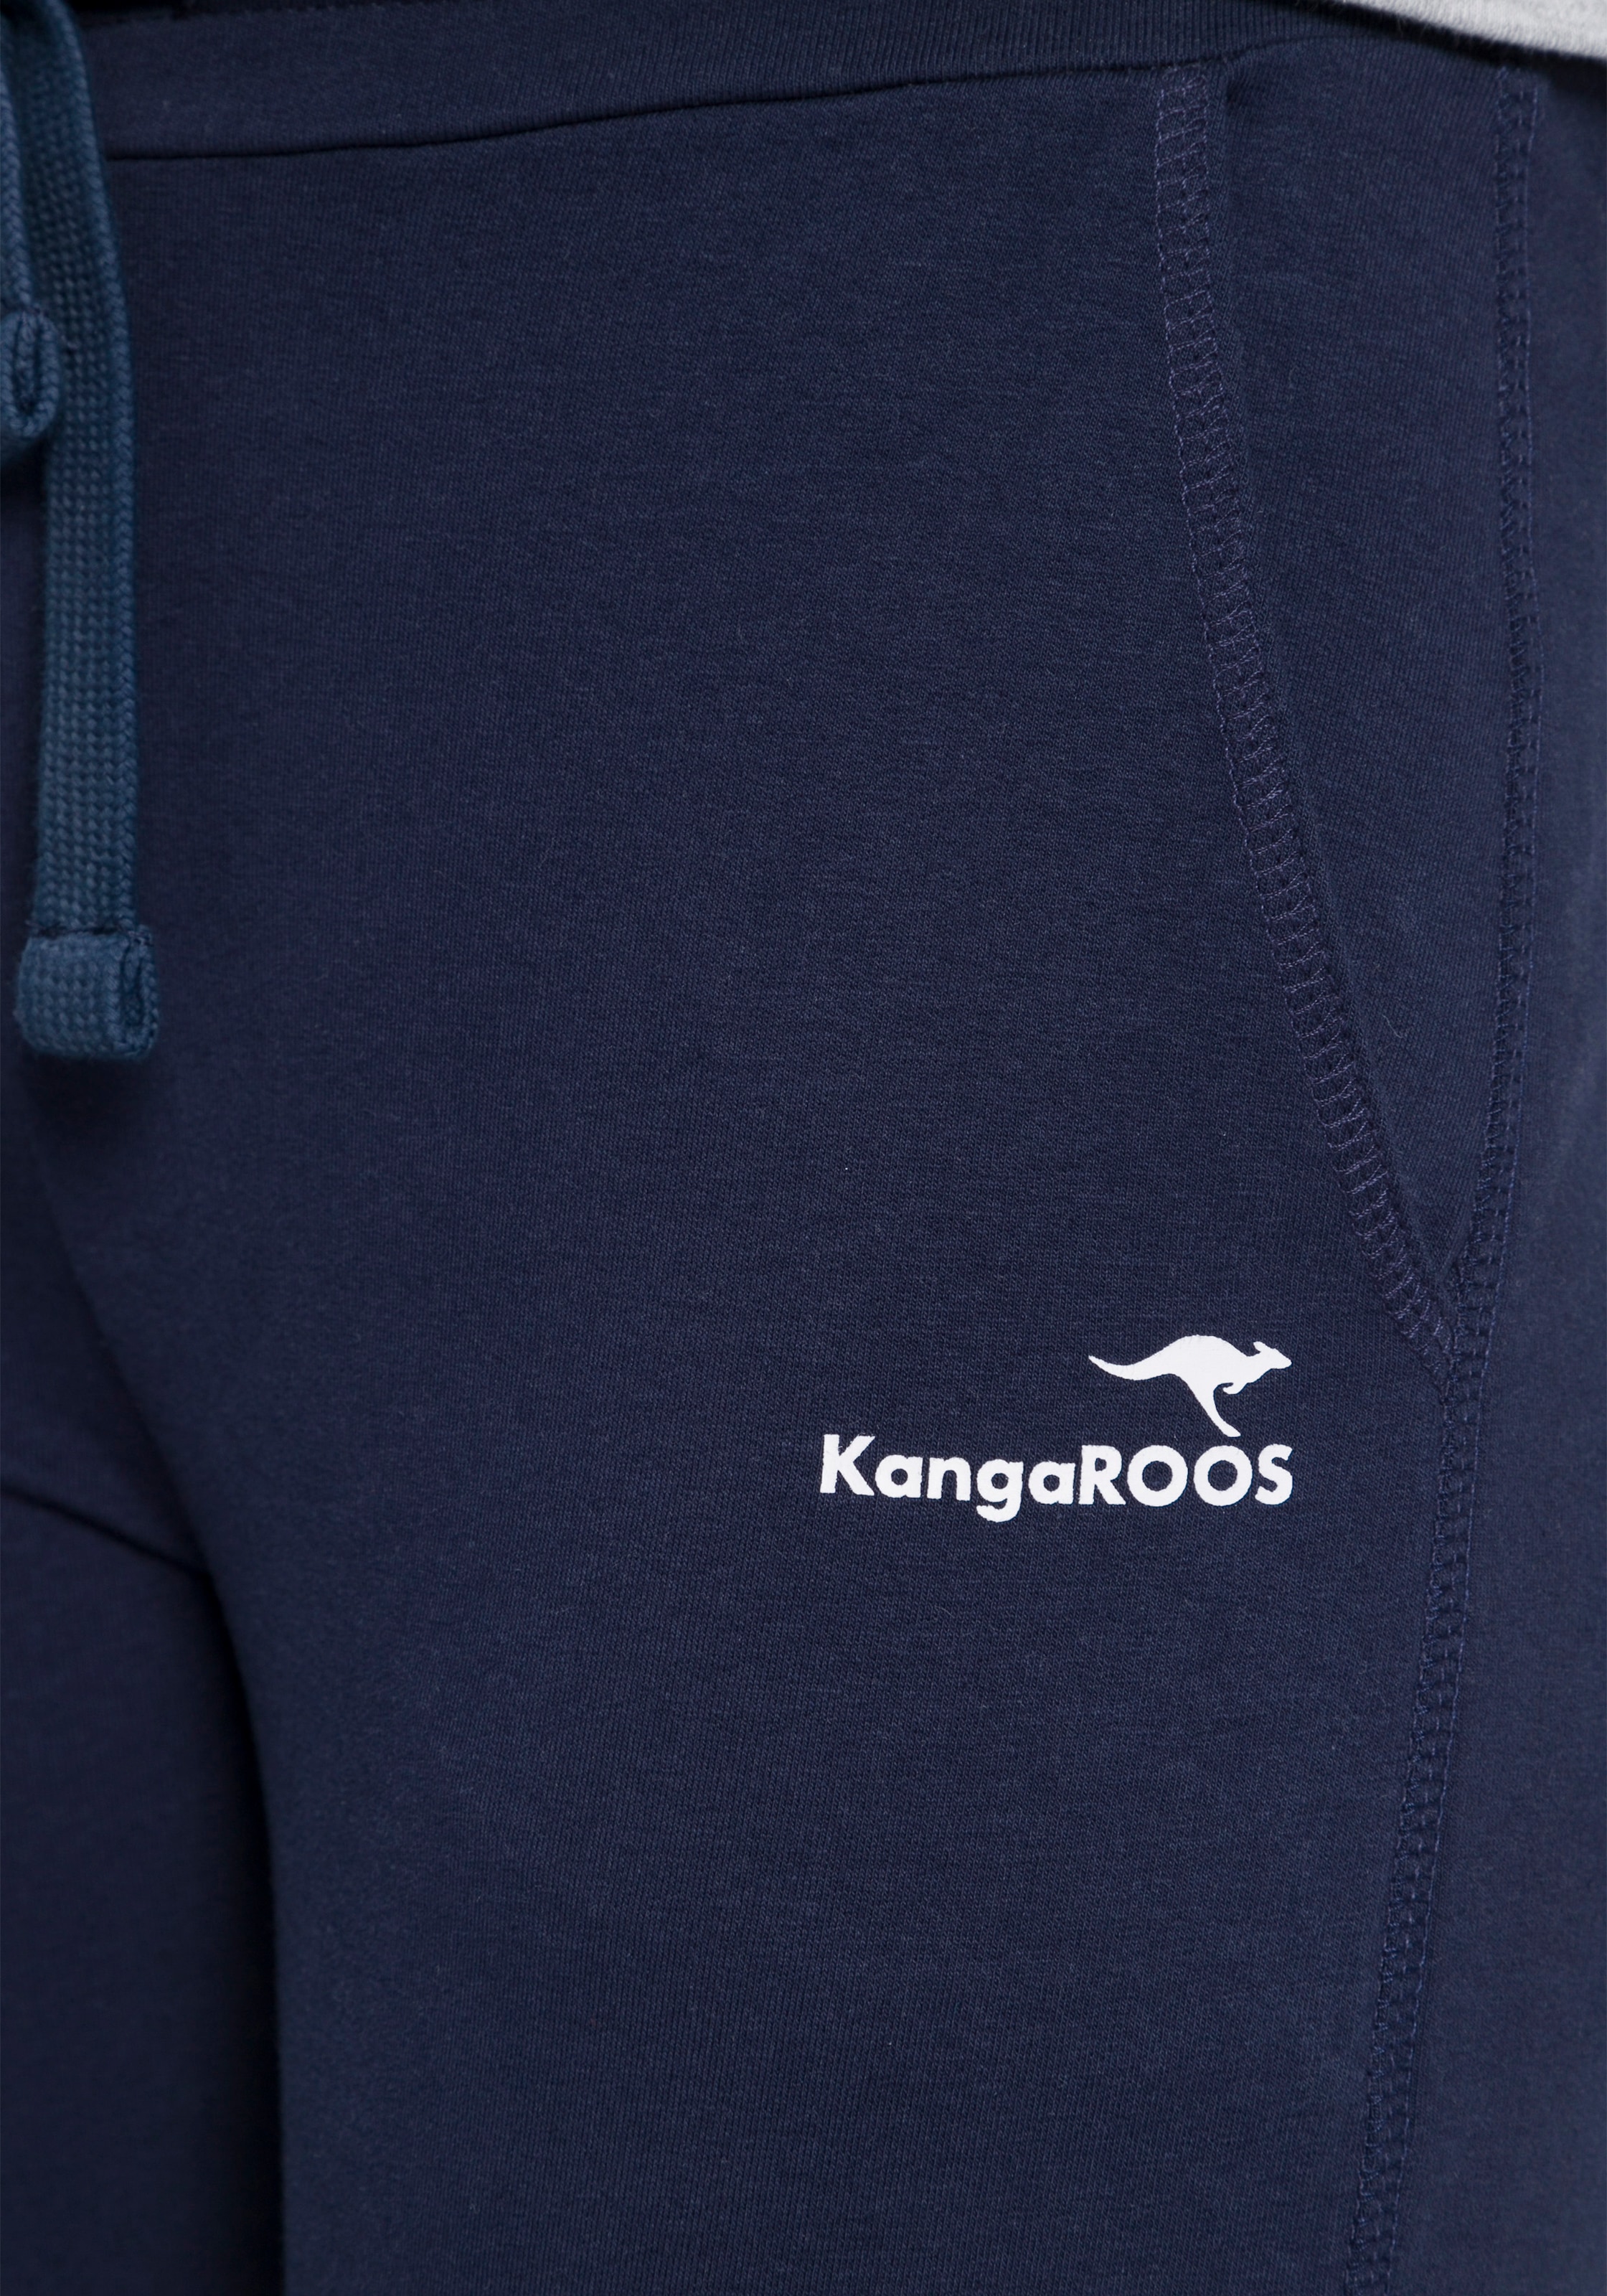 KangaROOS in Jogginghose, online mit Logo-Druck 7/8-Länge